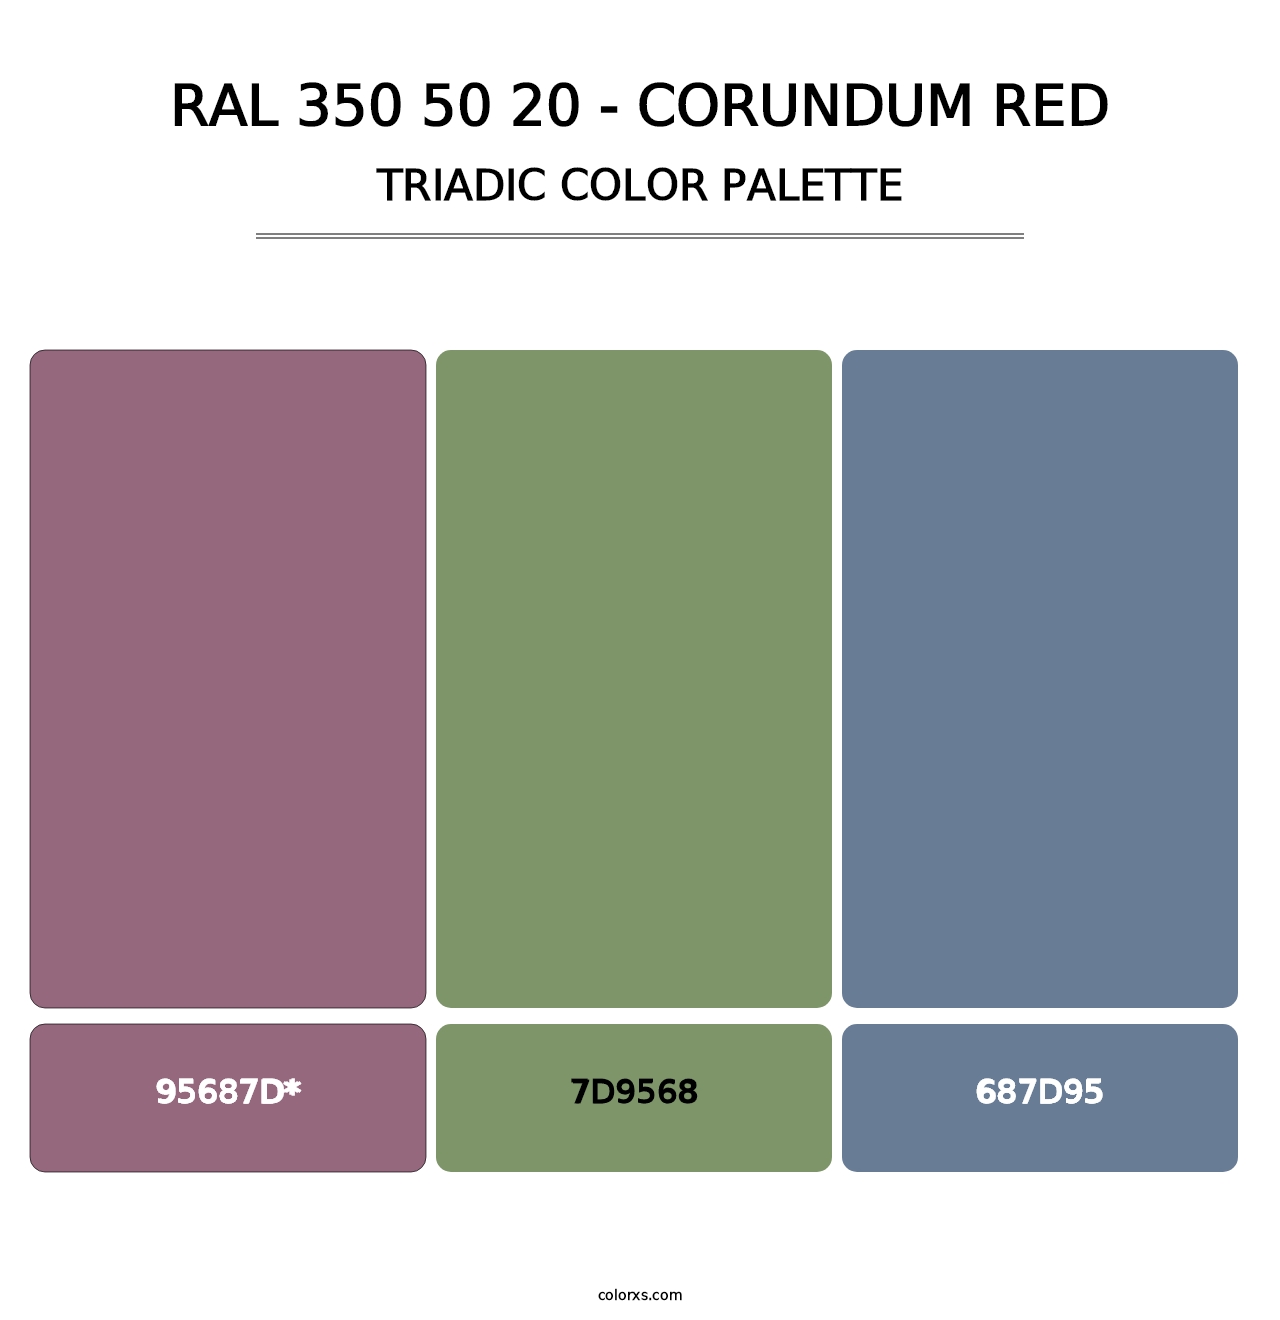 RAL 350 50 20 - Corundum Red - Triadic Color Palette